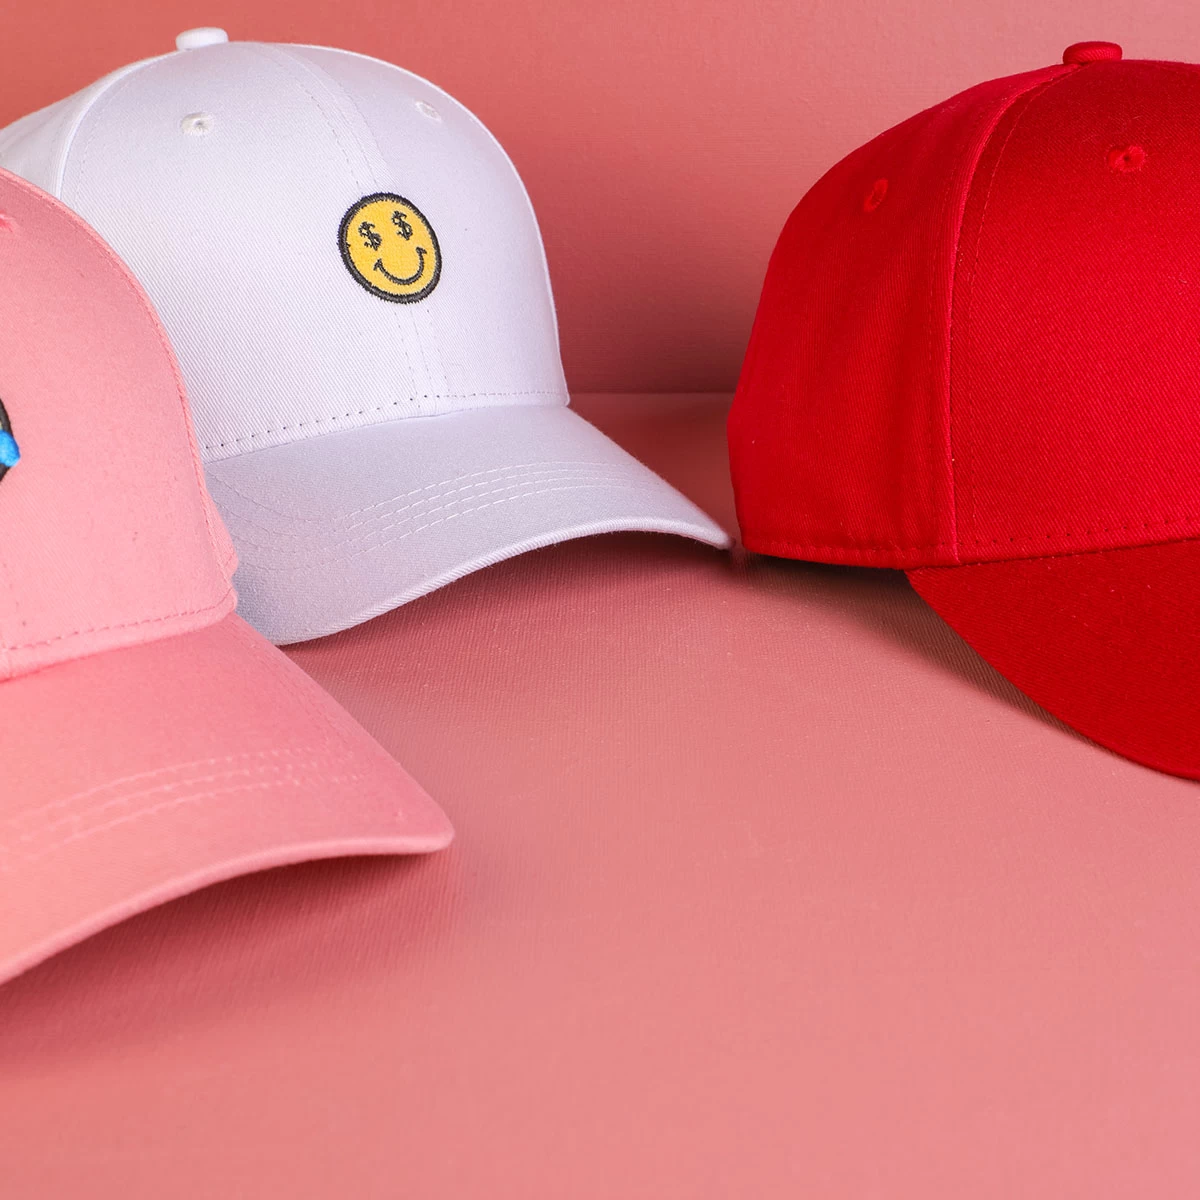 plain smiley face emoji embroidery logo, design logo custom baseball hats, plain caps hats wholesale china 